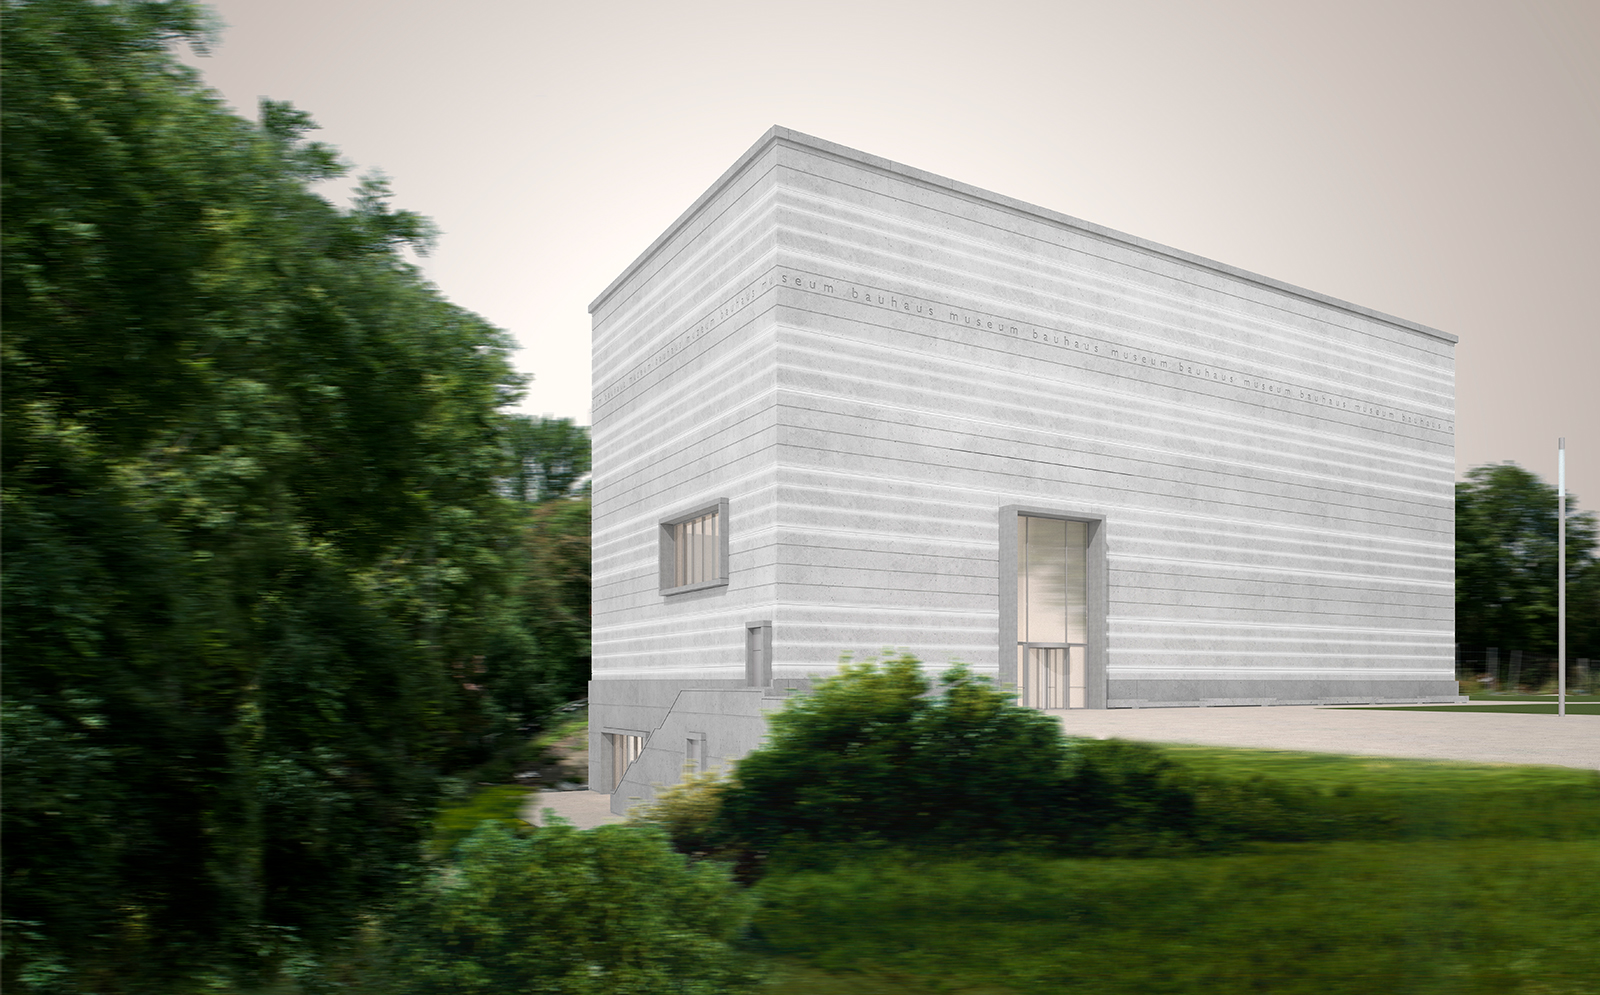 11 new museums opening in 2019: Bauhaus Museum Dessau